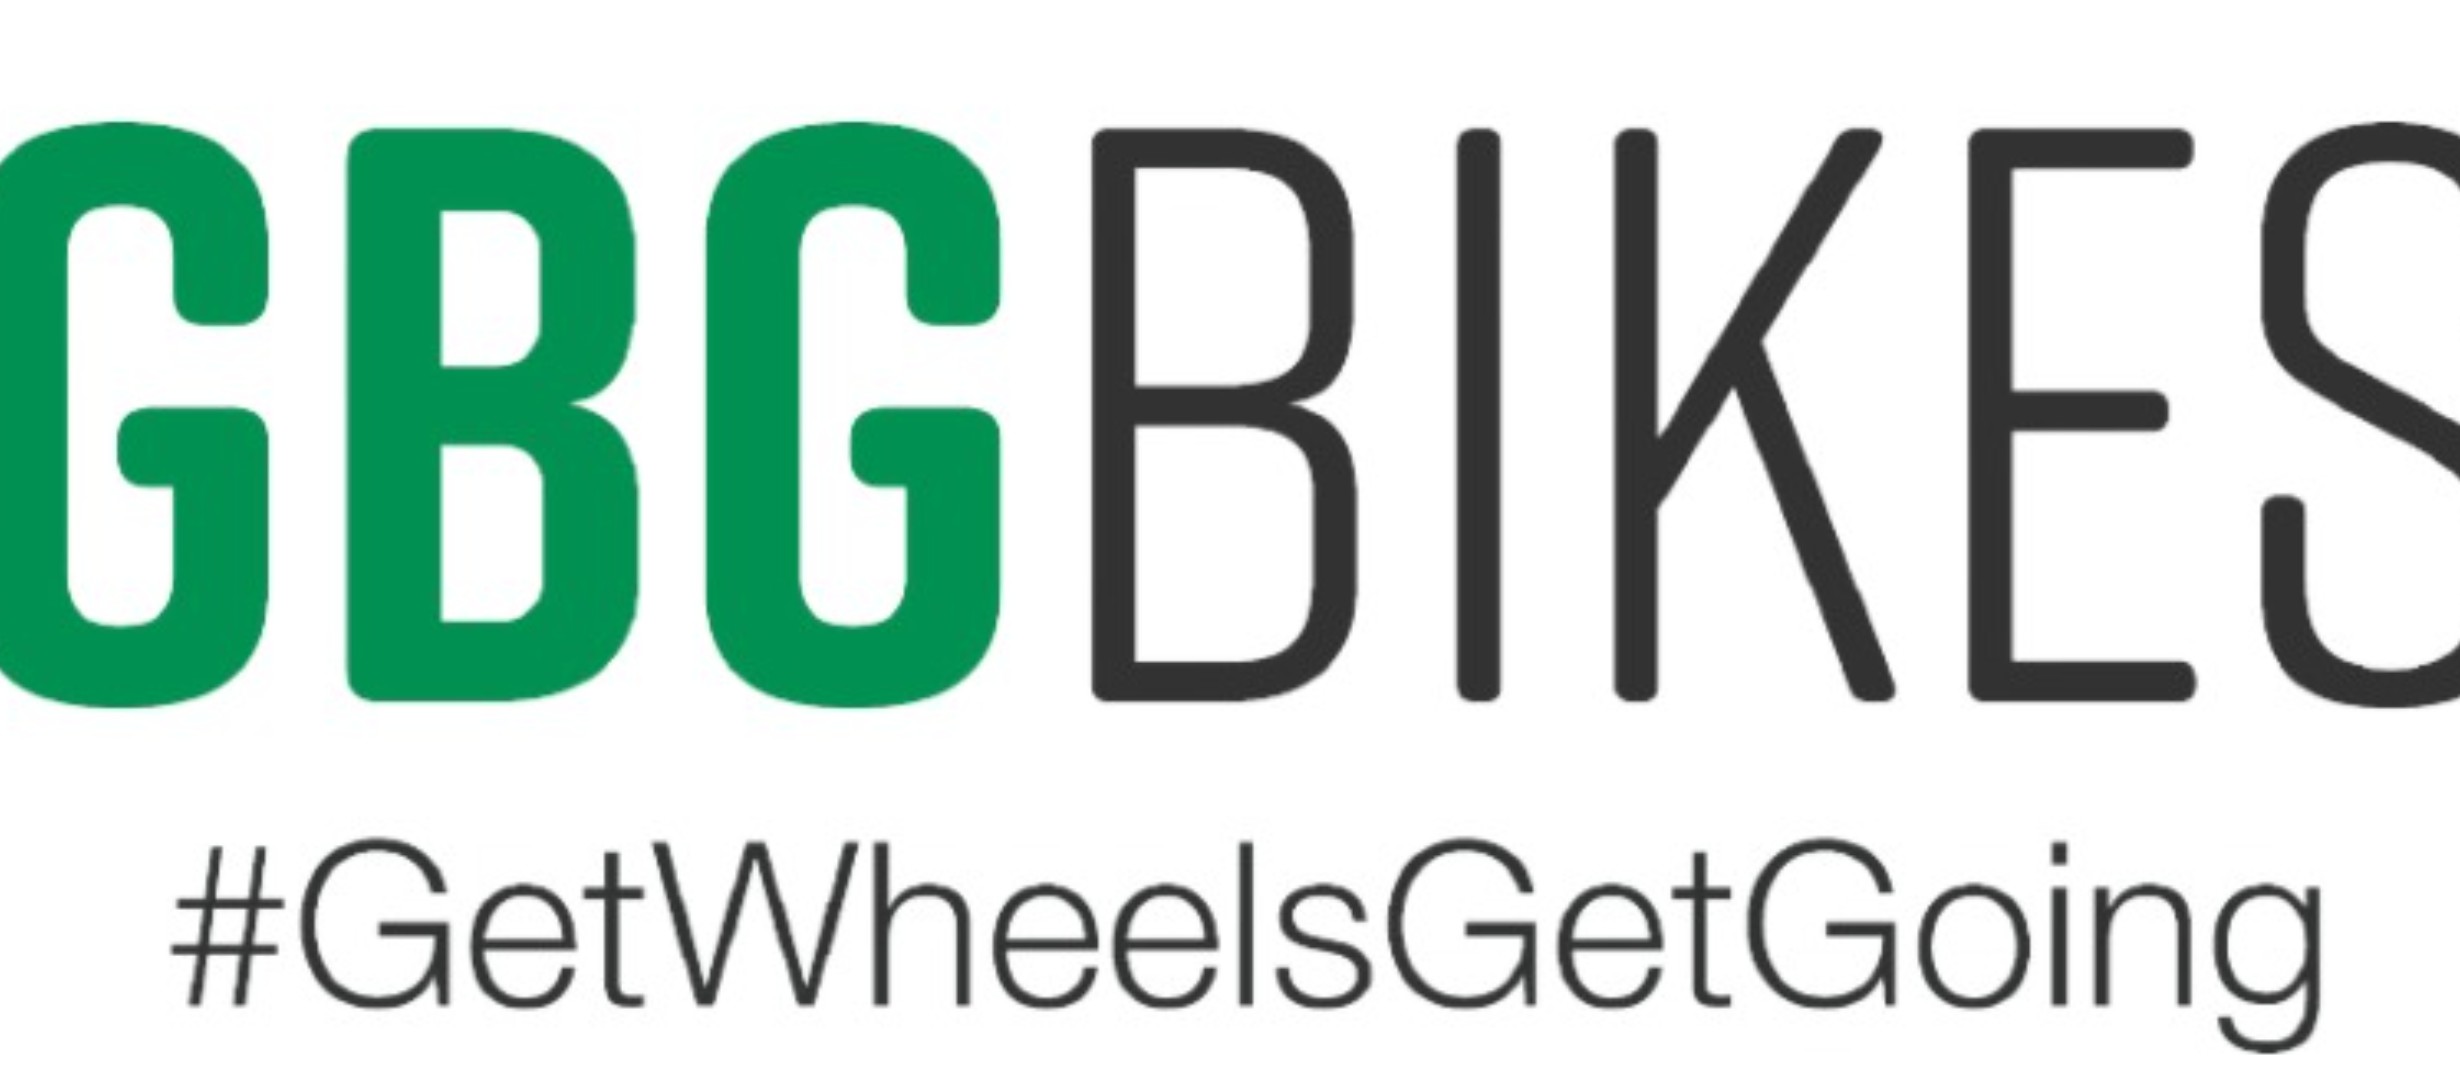 GBG Bikes logo and slogan